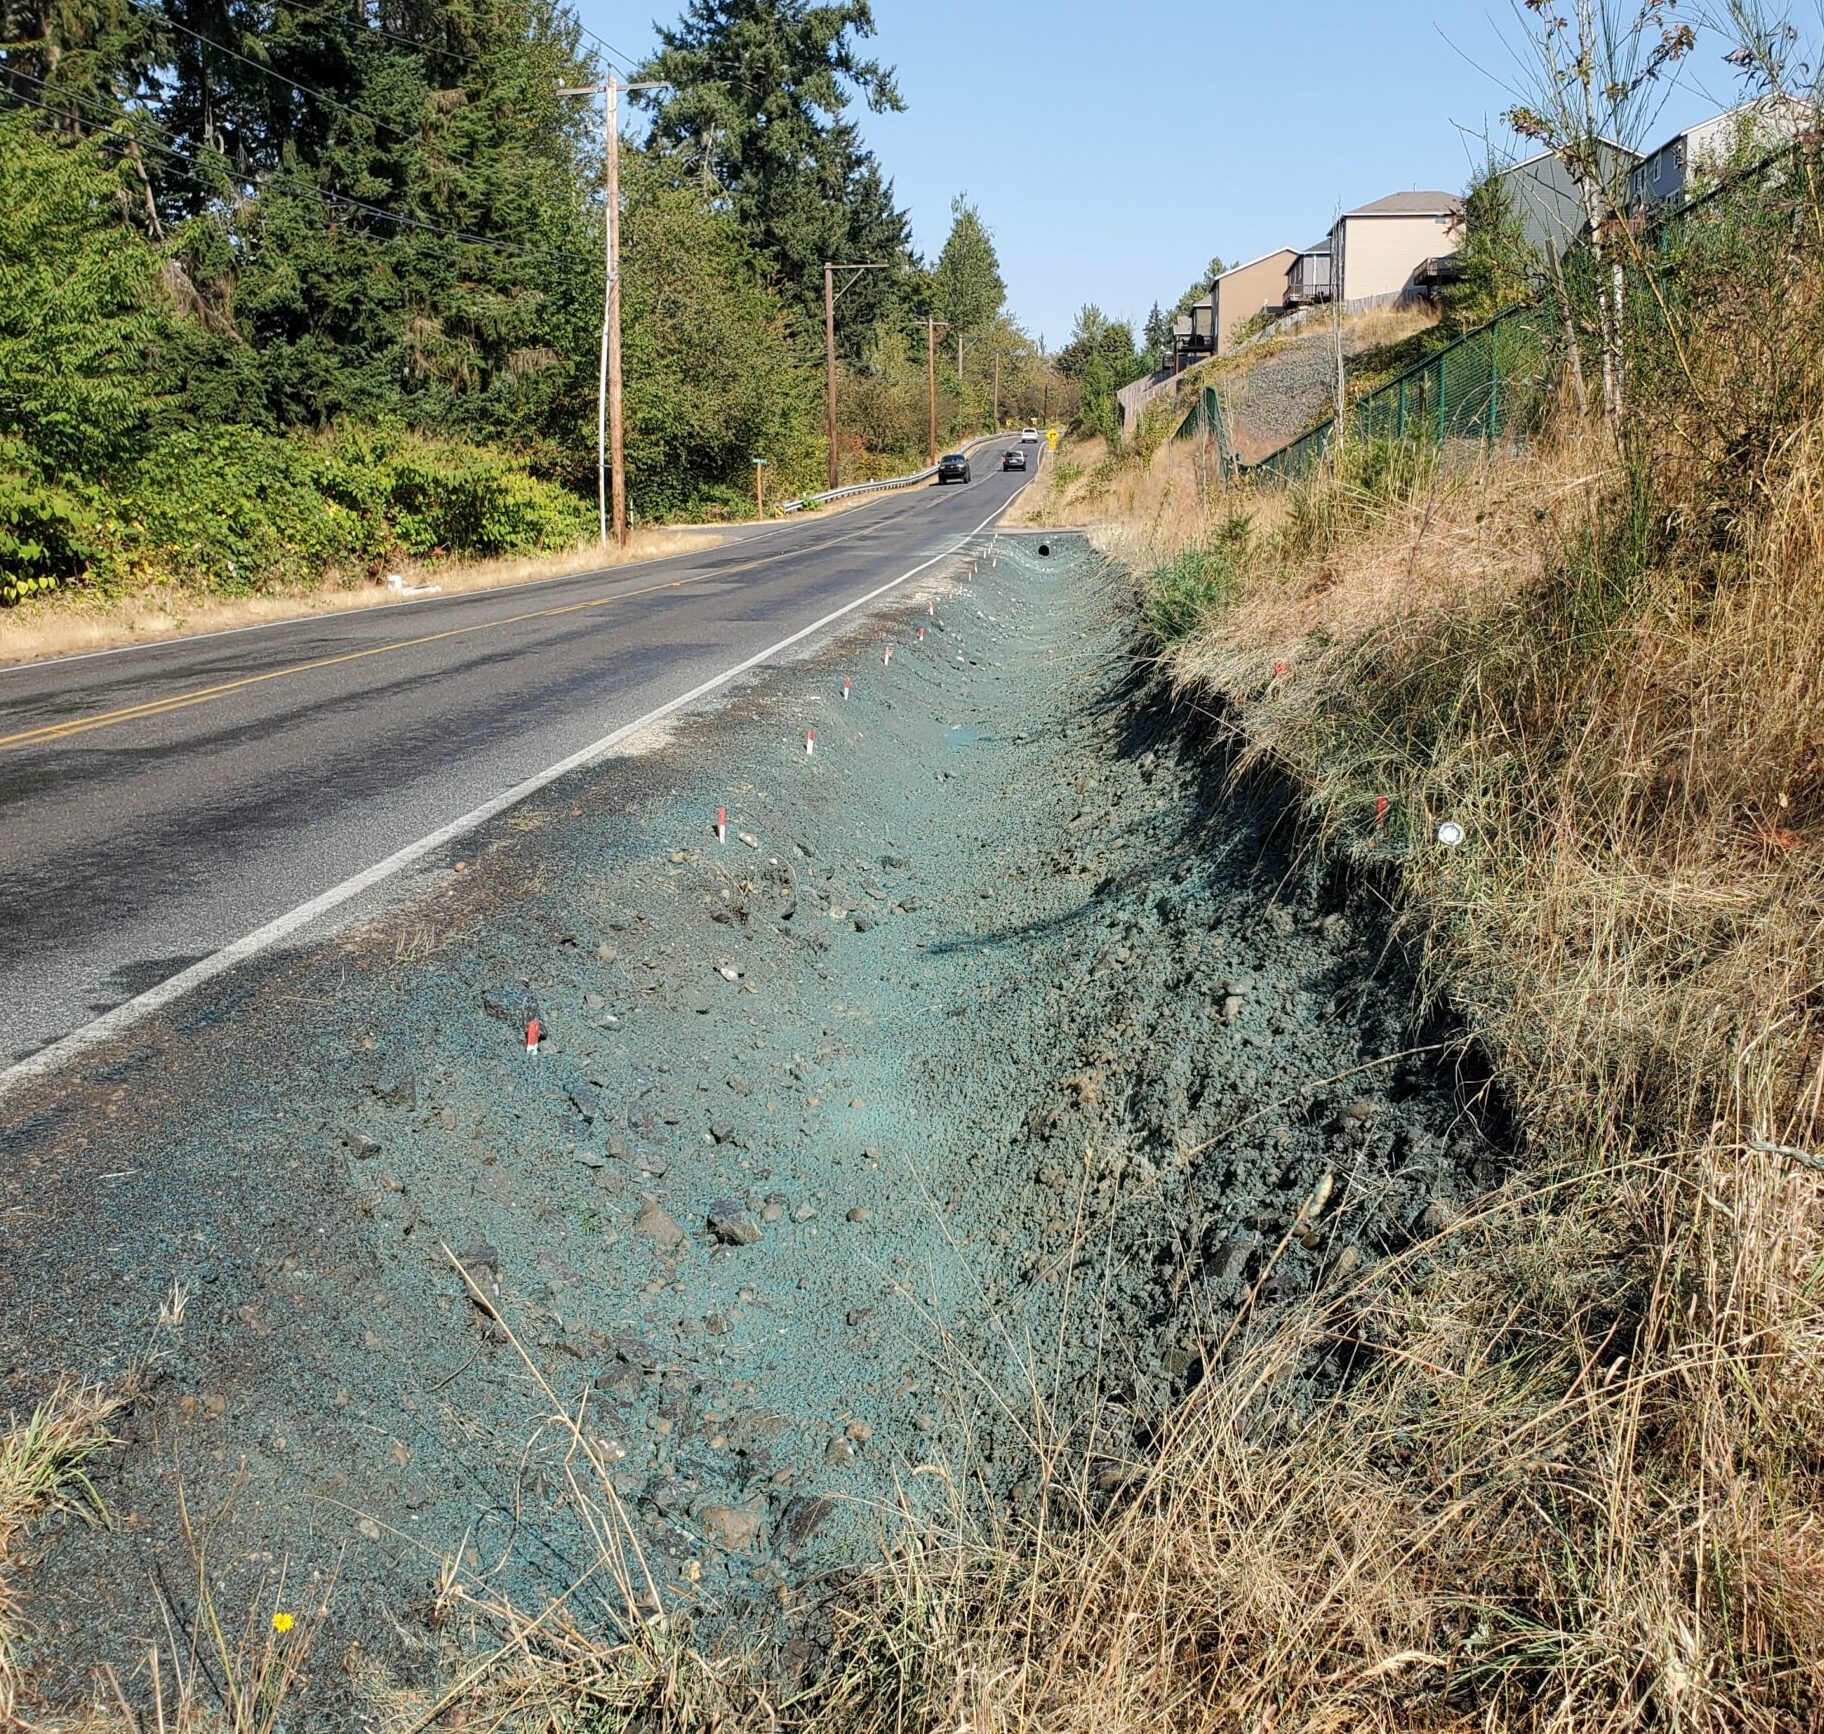 Roadside ditch covered in blue hydroseed